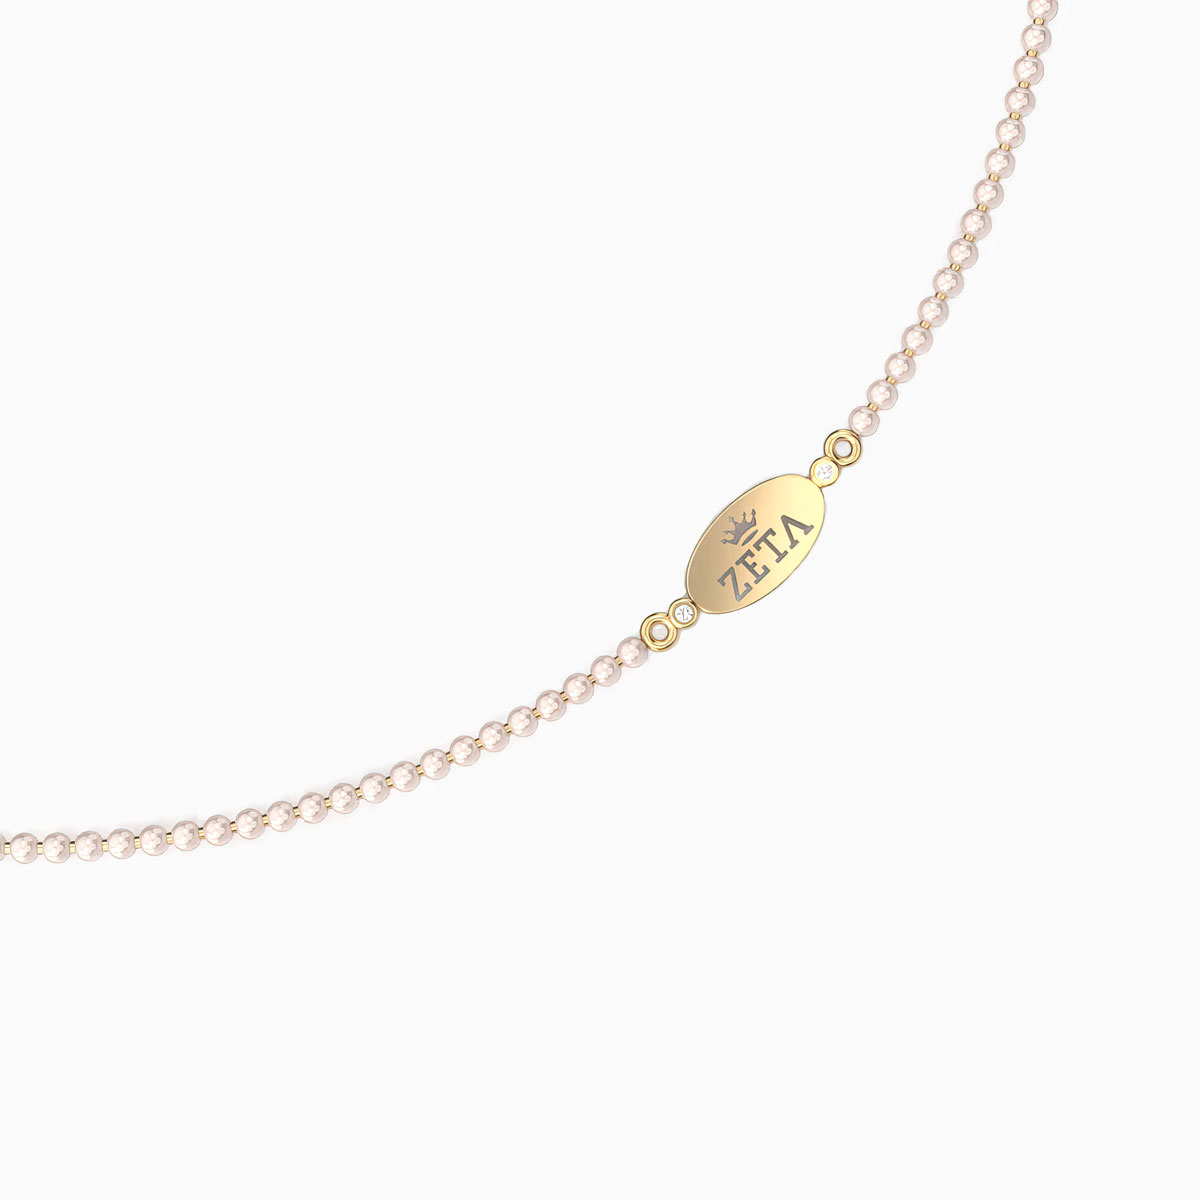 Dino Lonzano Sorority Oval Necklace with Diamonds, 14k Gold